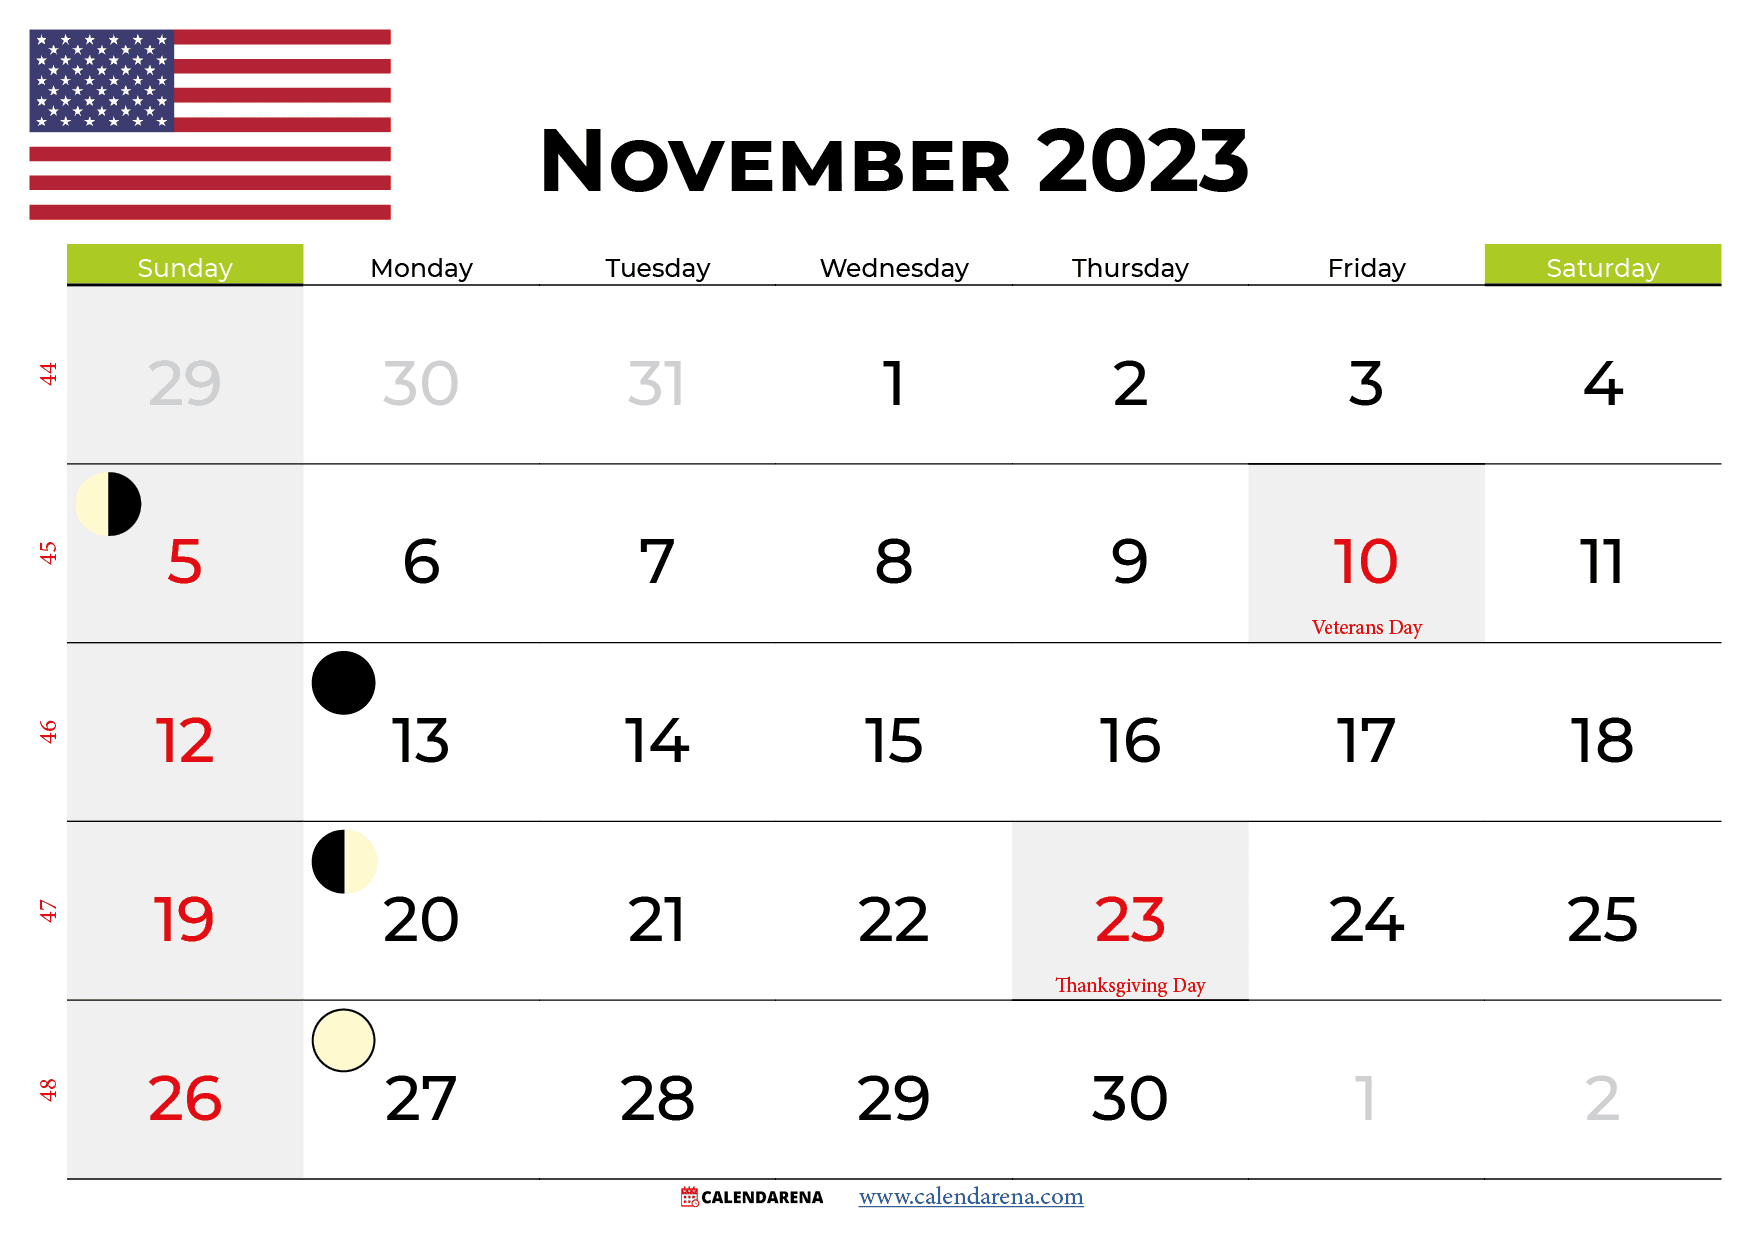 november 2023 calendar USA